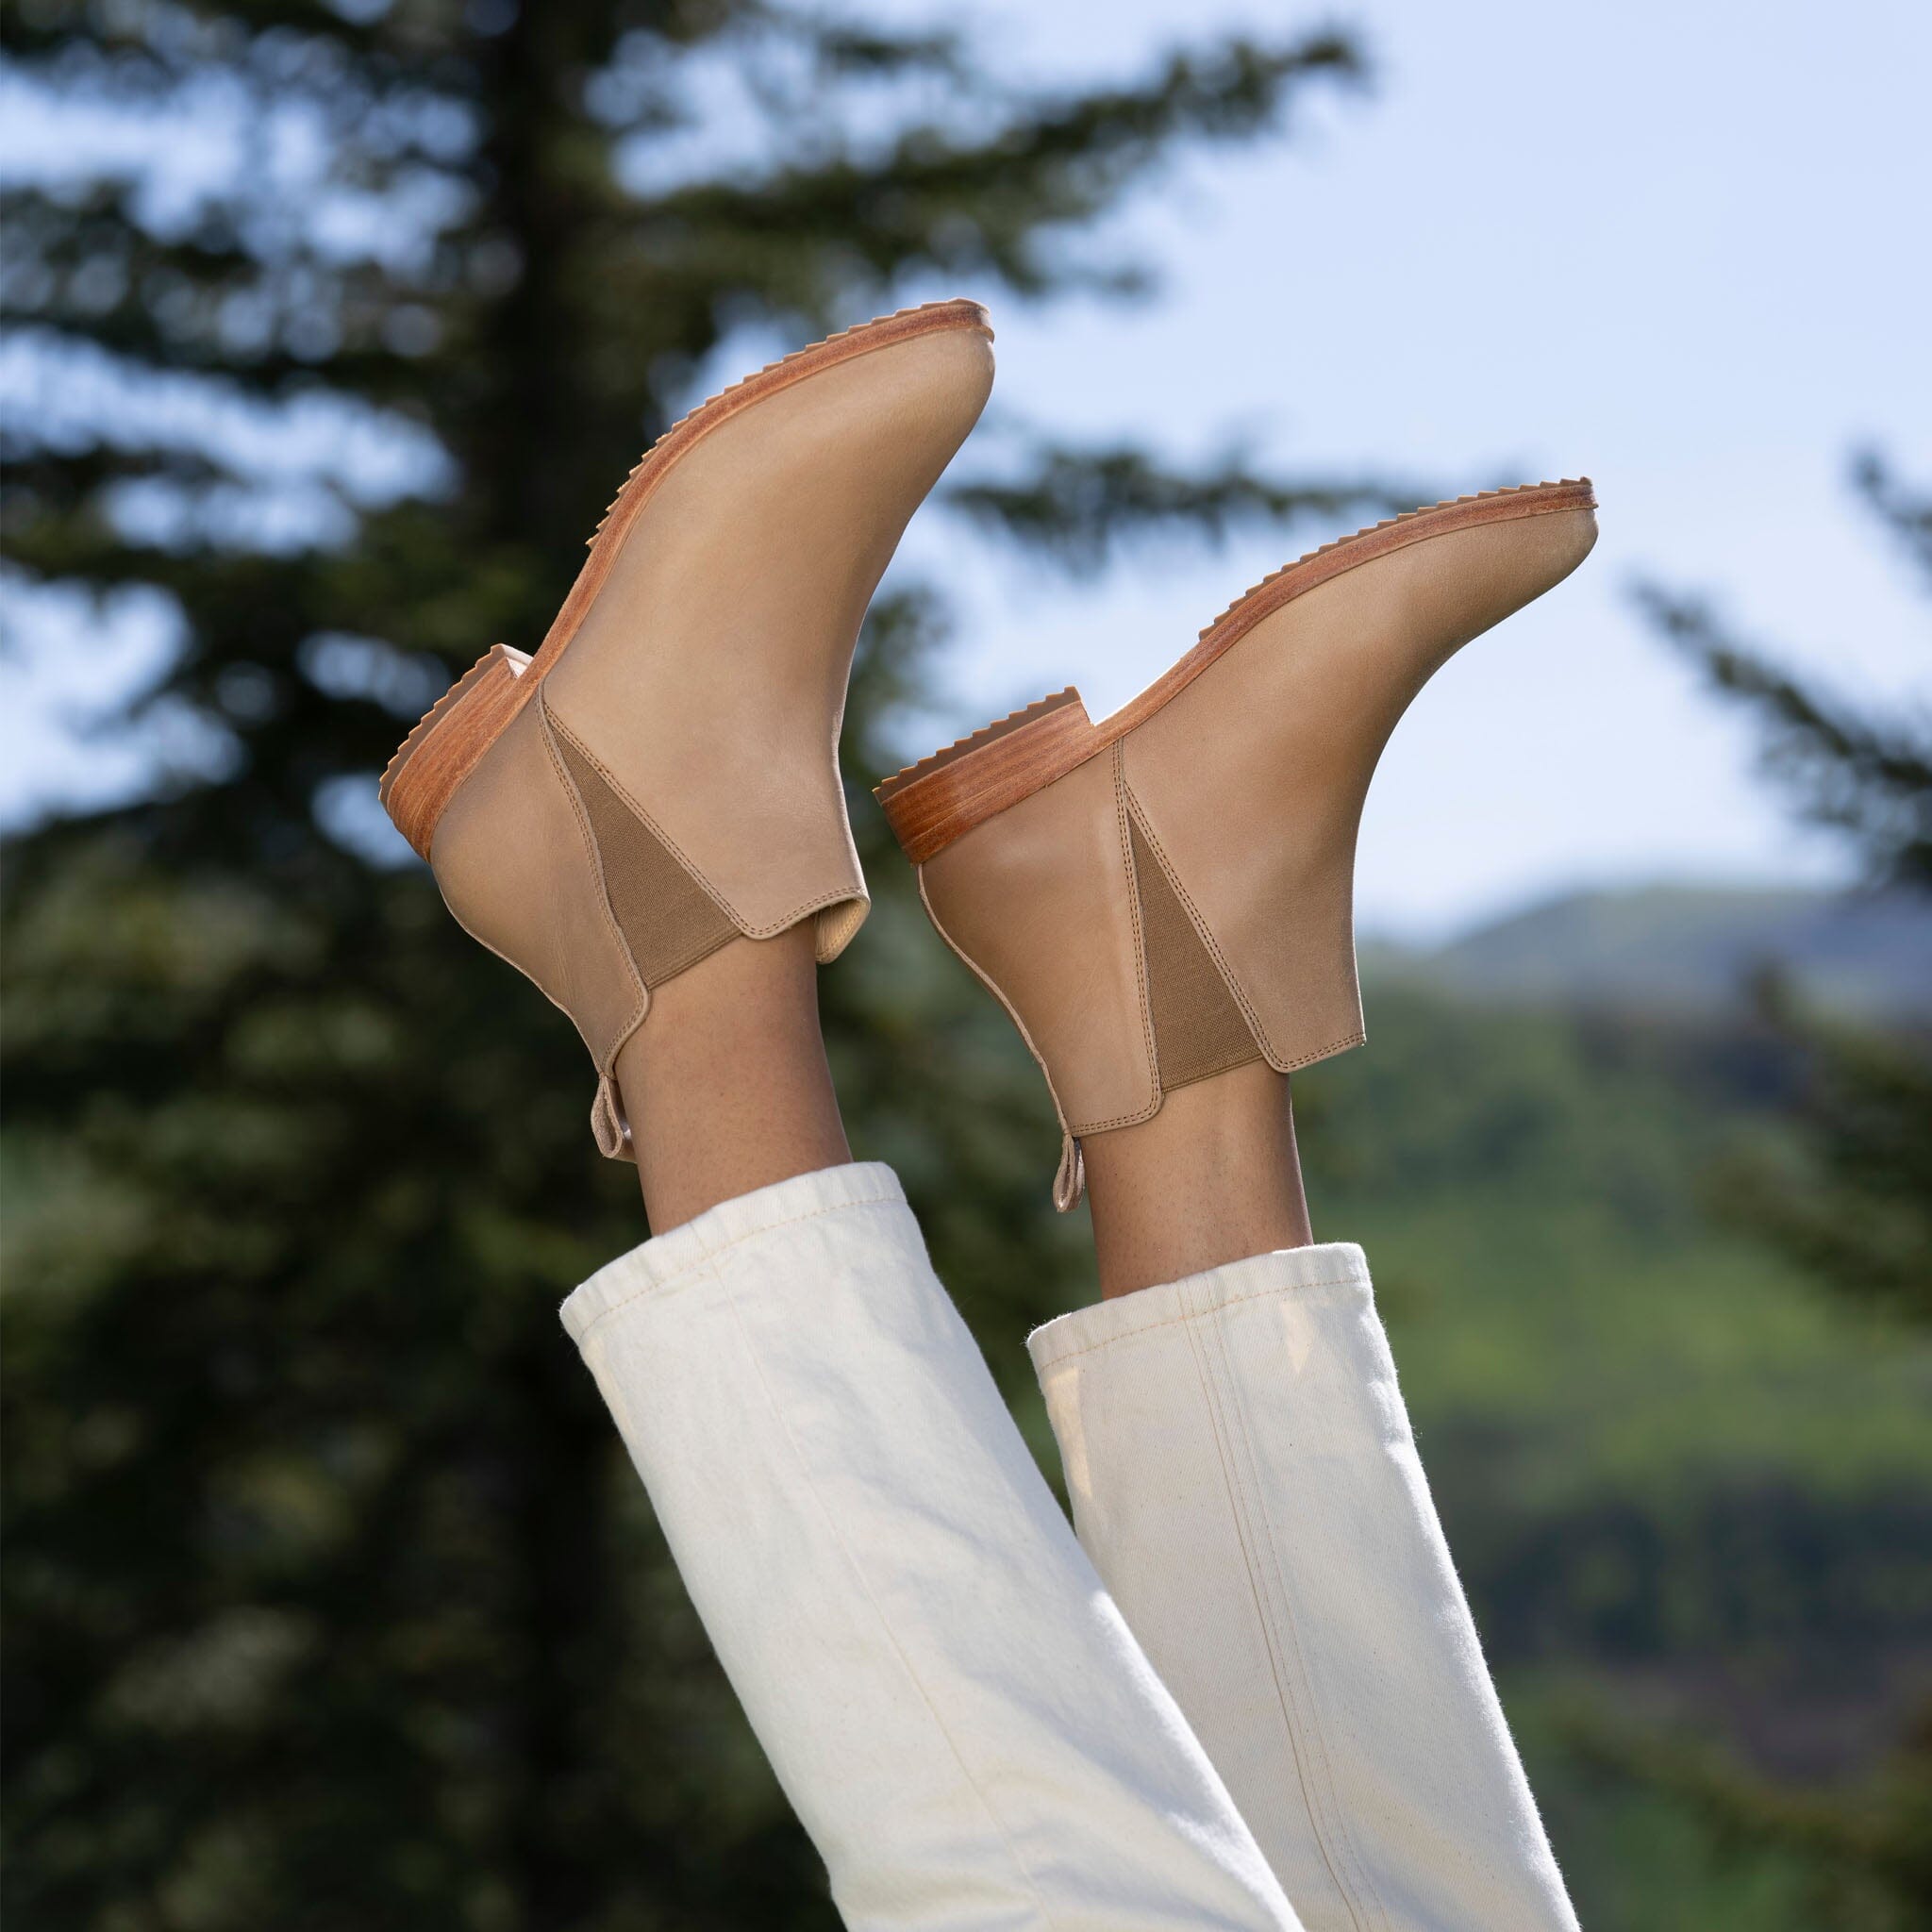 Louis Vuitton Patches Sock Boots - Size 41